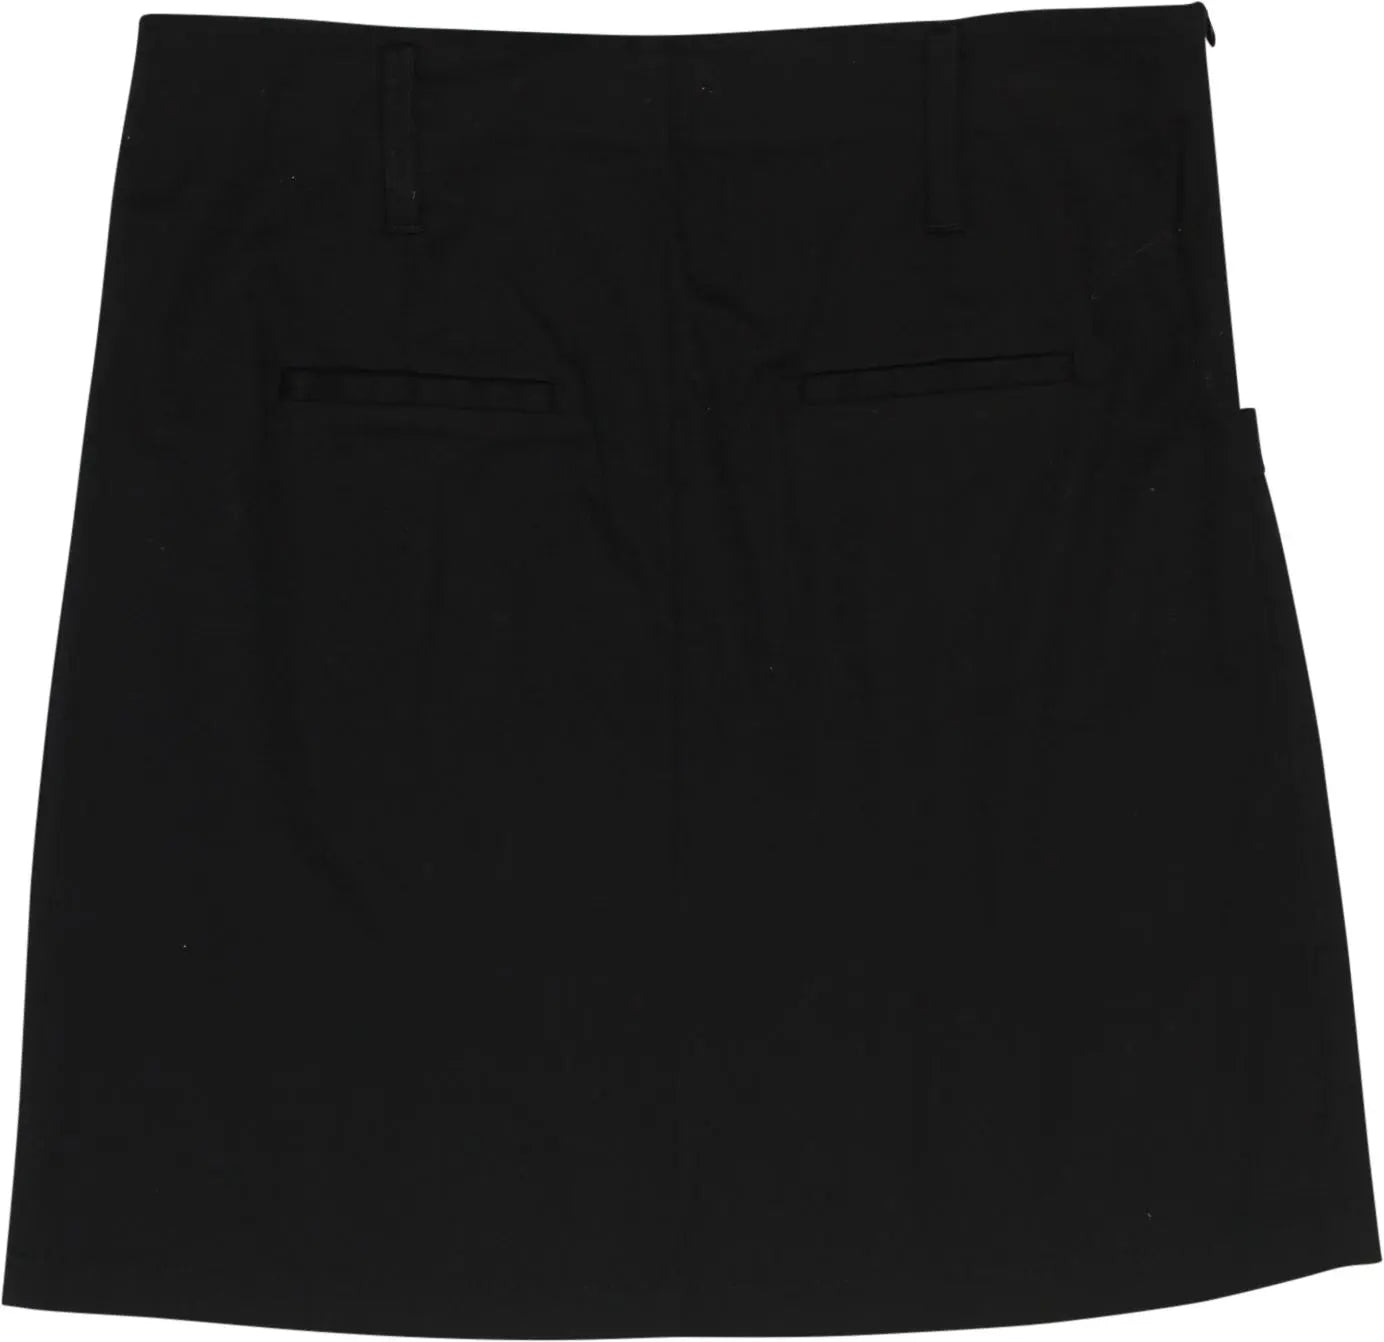 Bershka - Black Mini Skirt- ThriftTale.com - Vintage and second handclothing